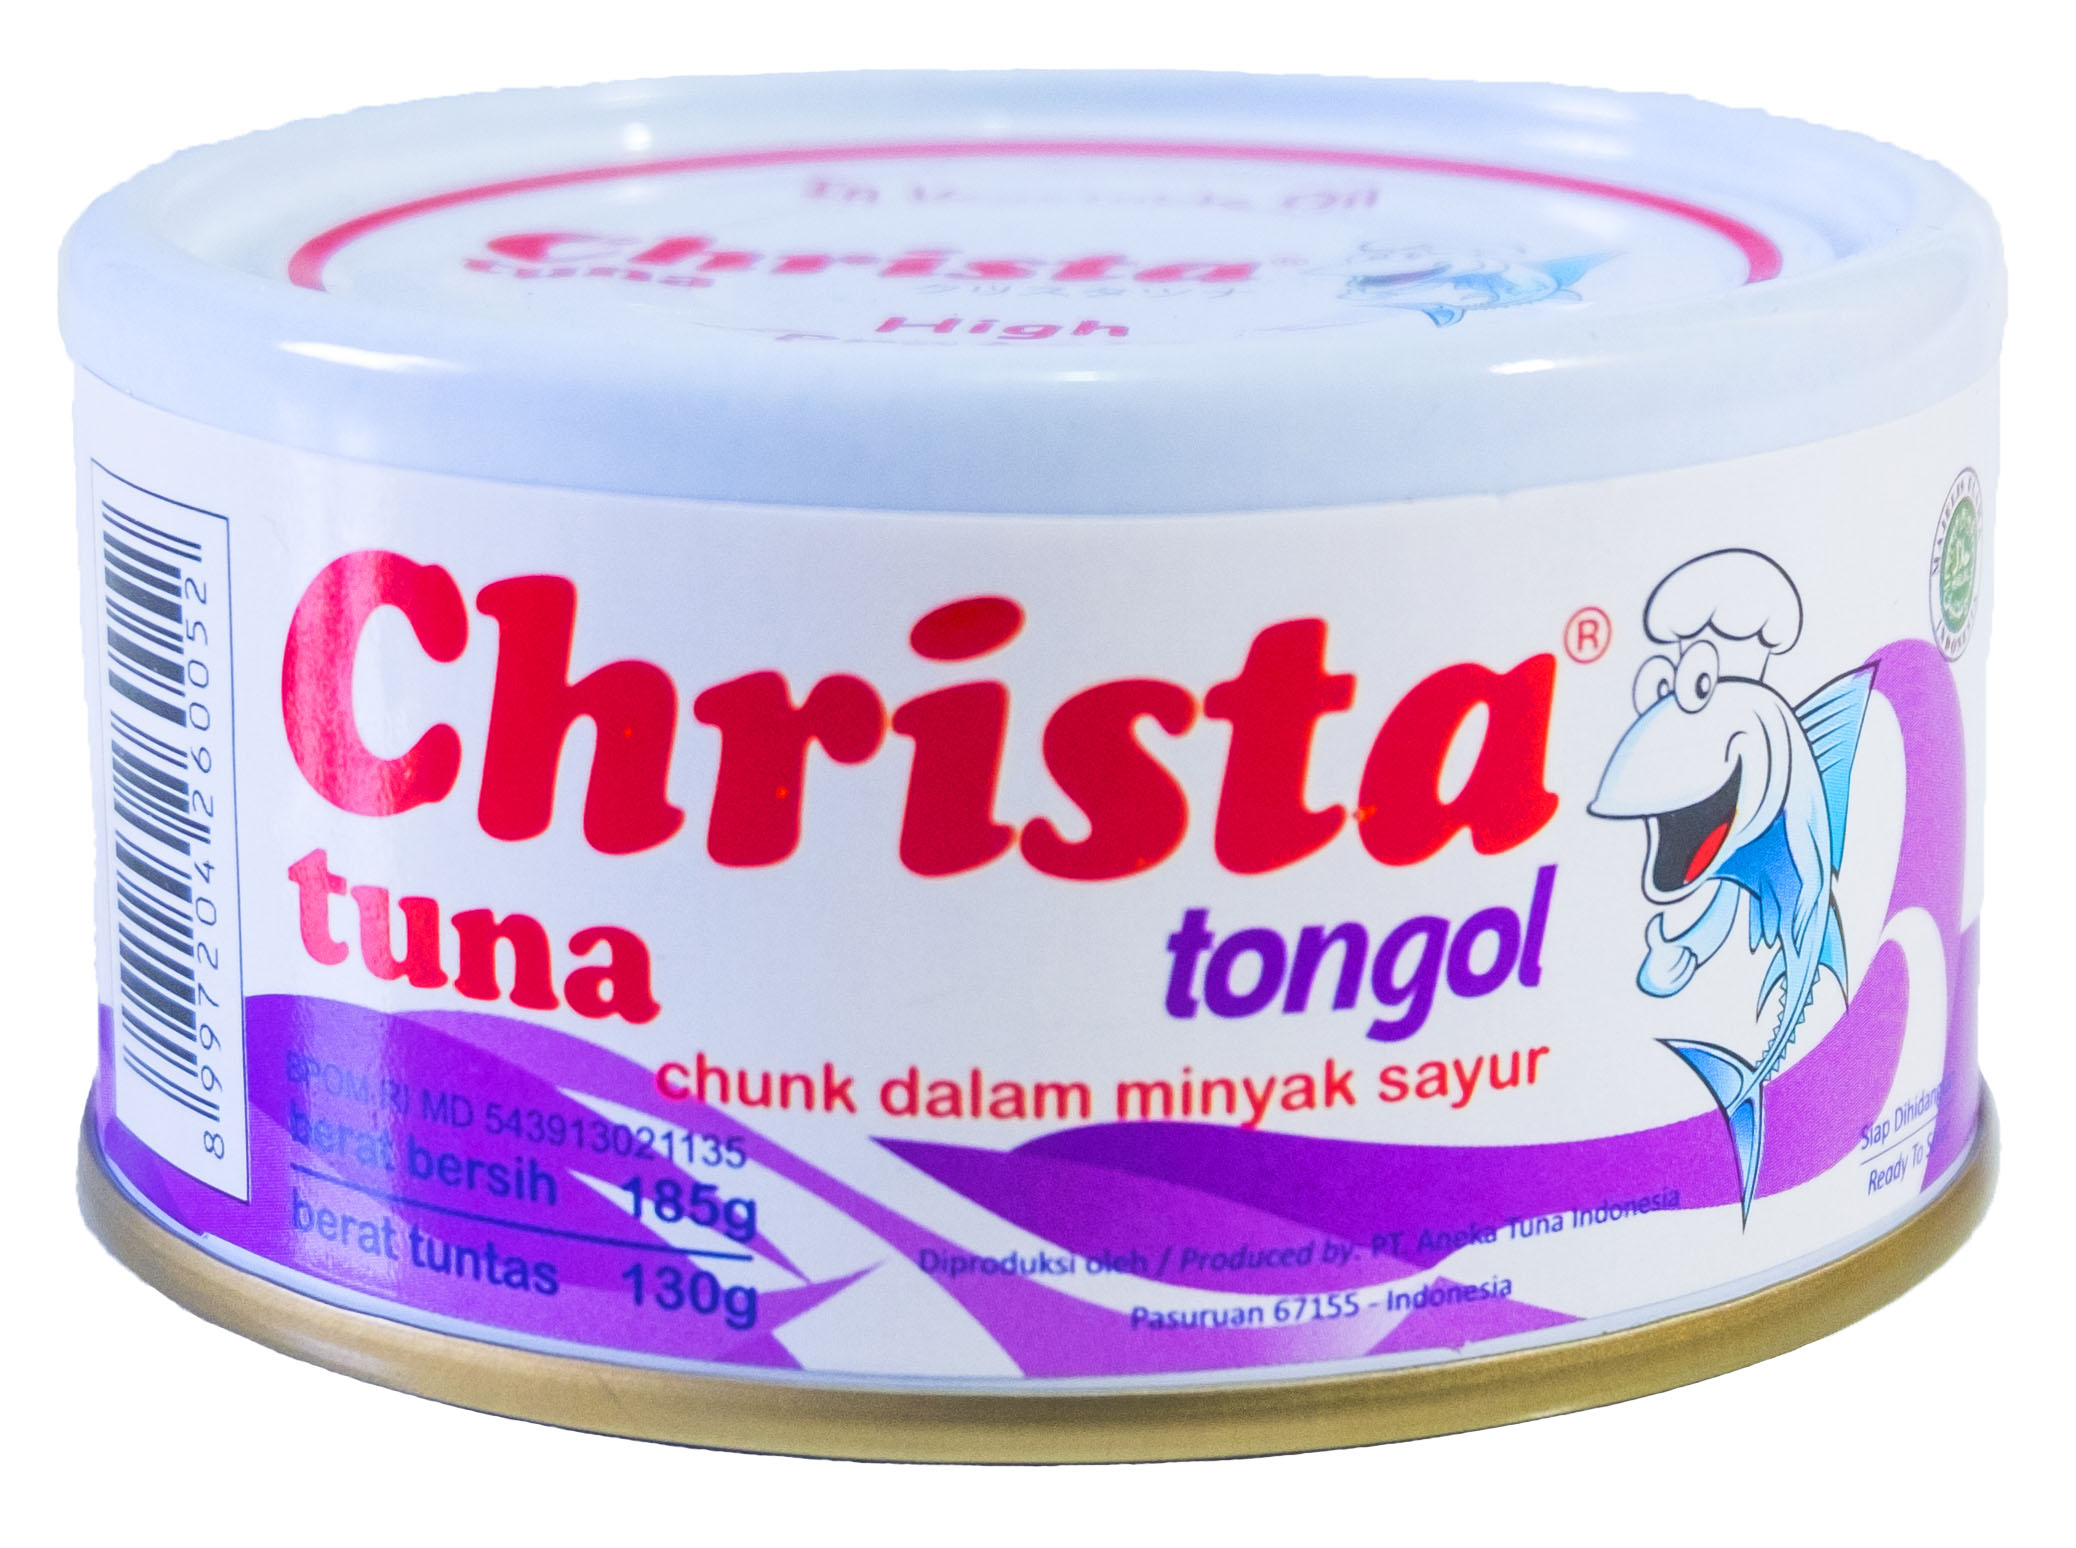 Christa Tuna Tongol in Oil 185 g